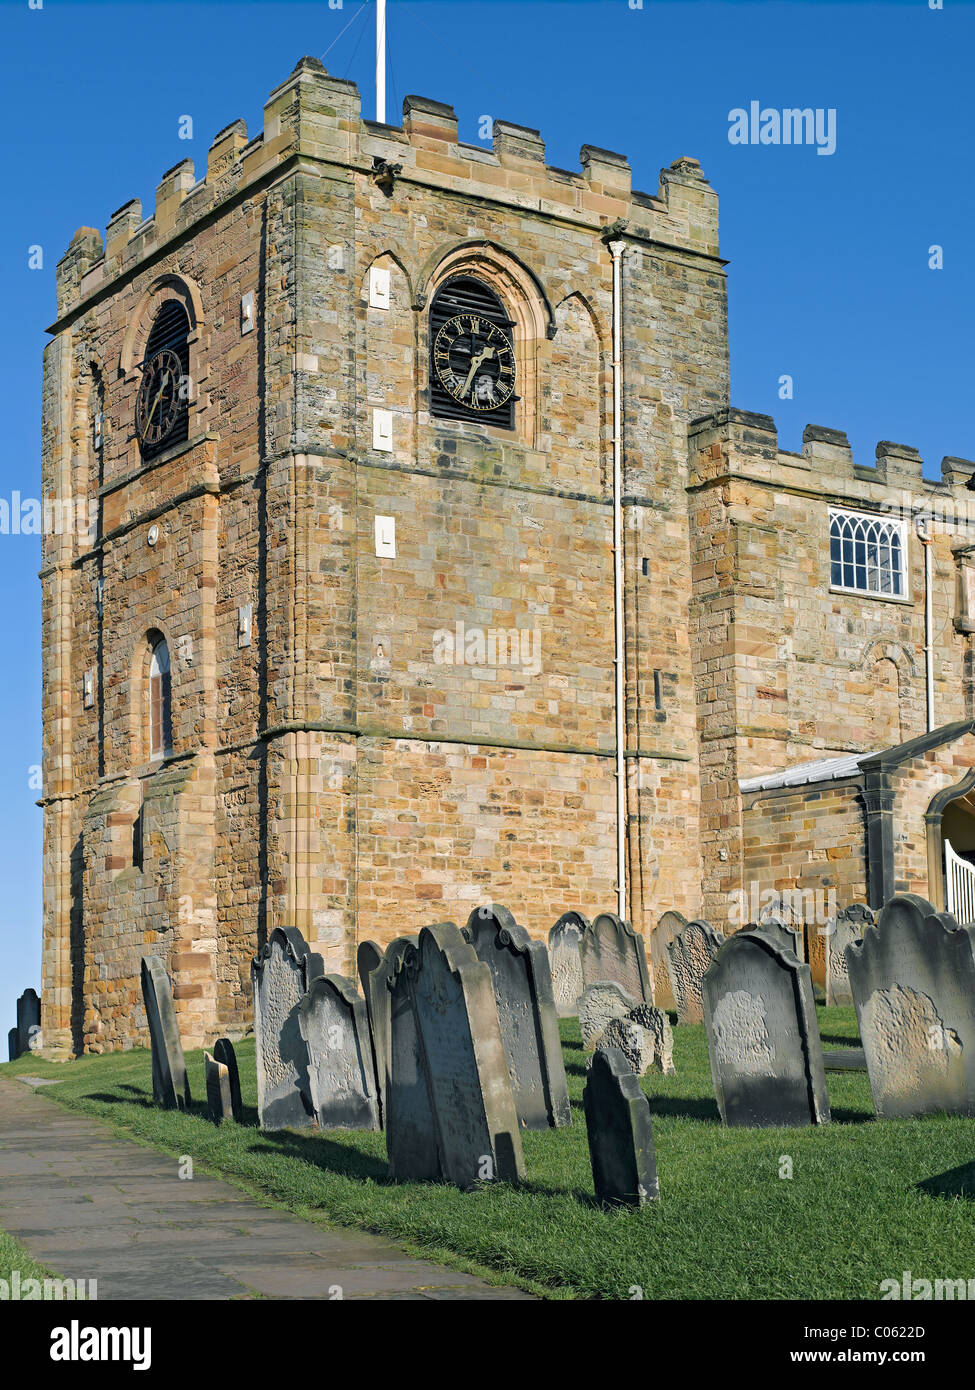 St Marys Church et cimetière East Cliff Whitby, North Yorkshire Angleterre Royaume-Uni Royaume-Uni GB Grande Bretagne Banque D'Images